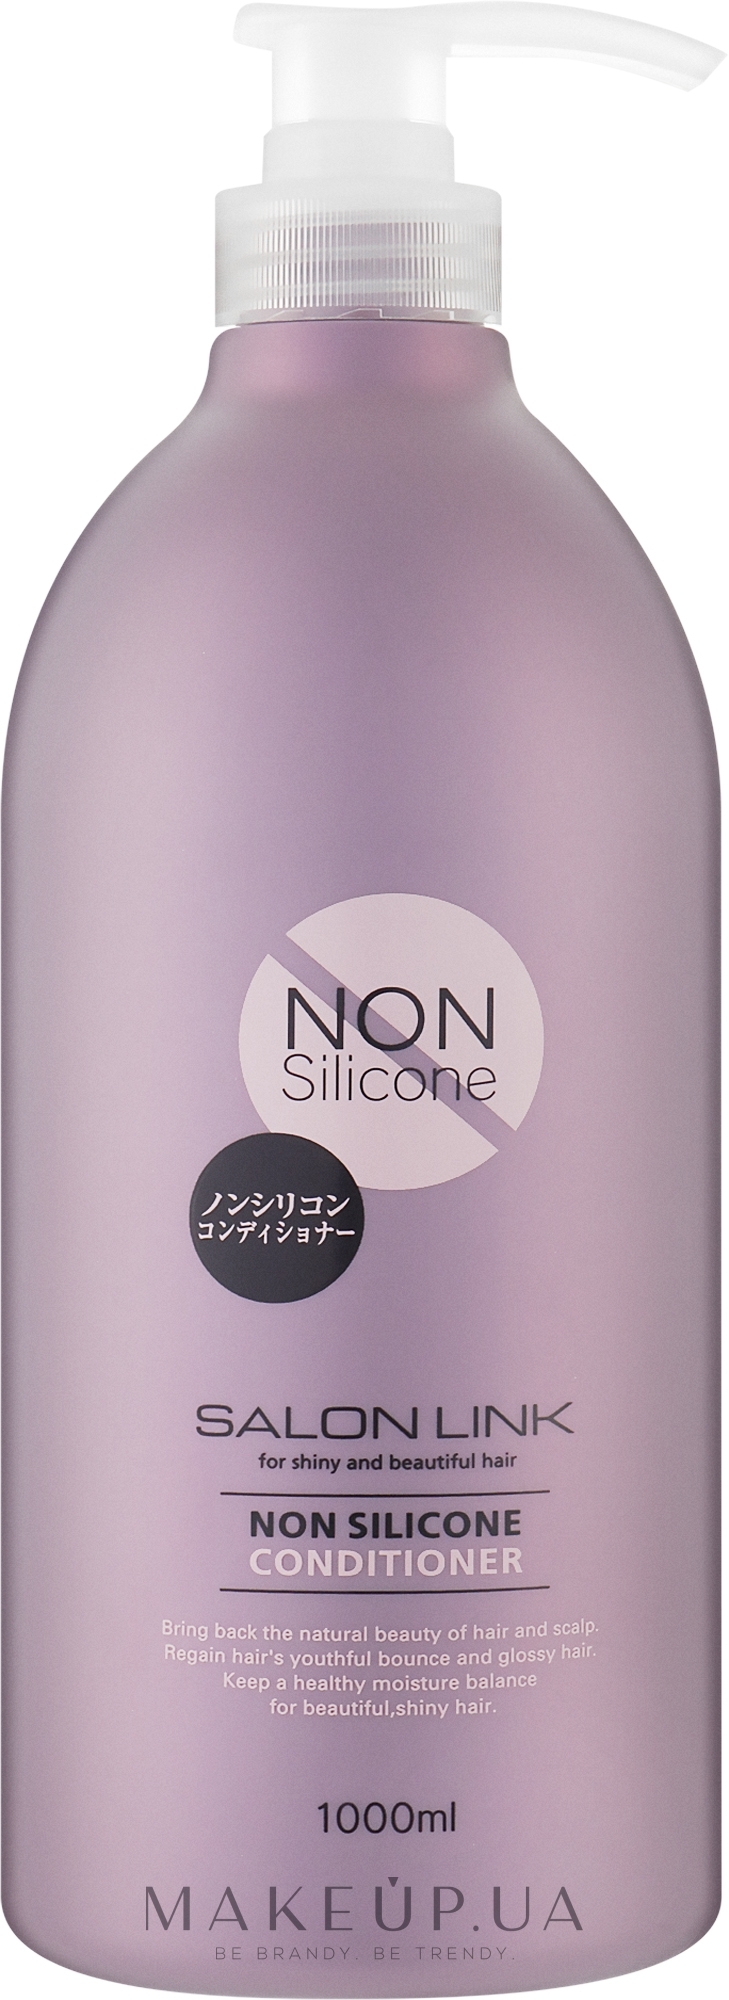 Увлажняющий кондиционер для волос - Kumano Cosmetics Salon Link Non Silicon Conditioner — фото 1000ml